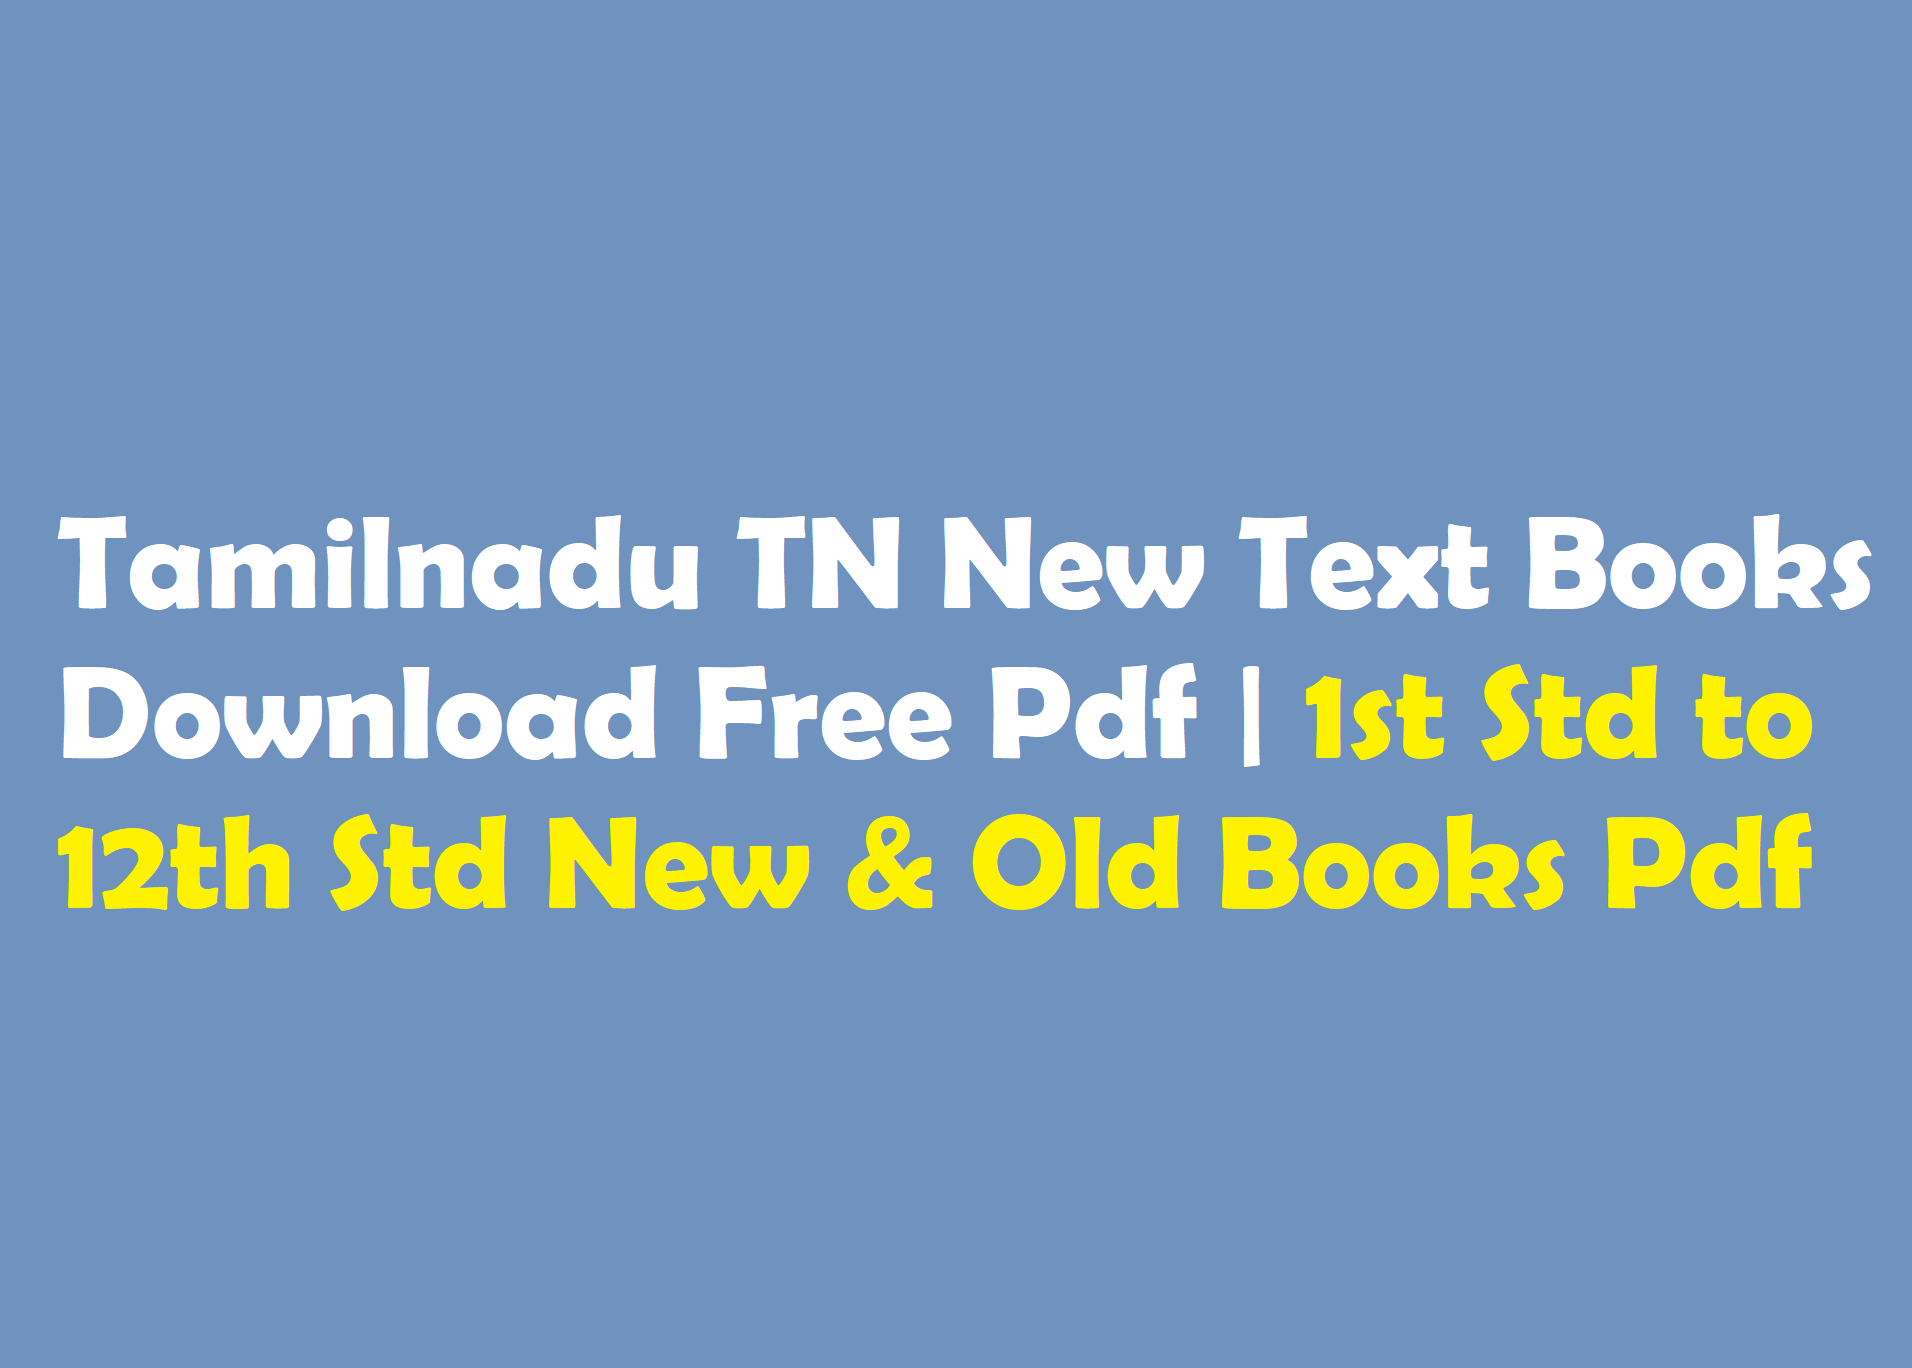 6th tamil books free download